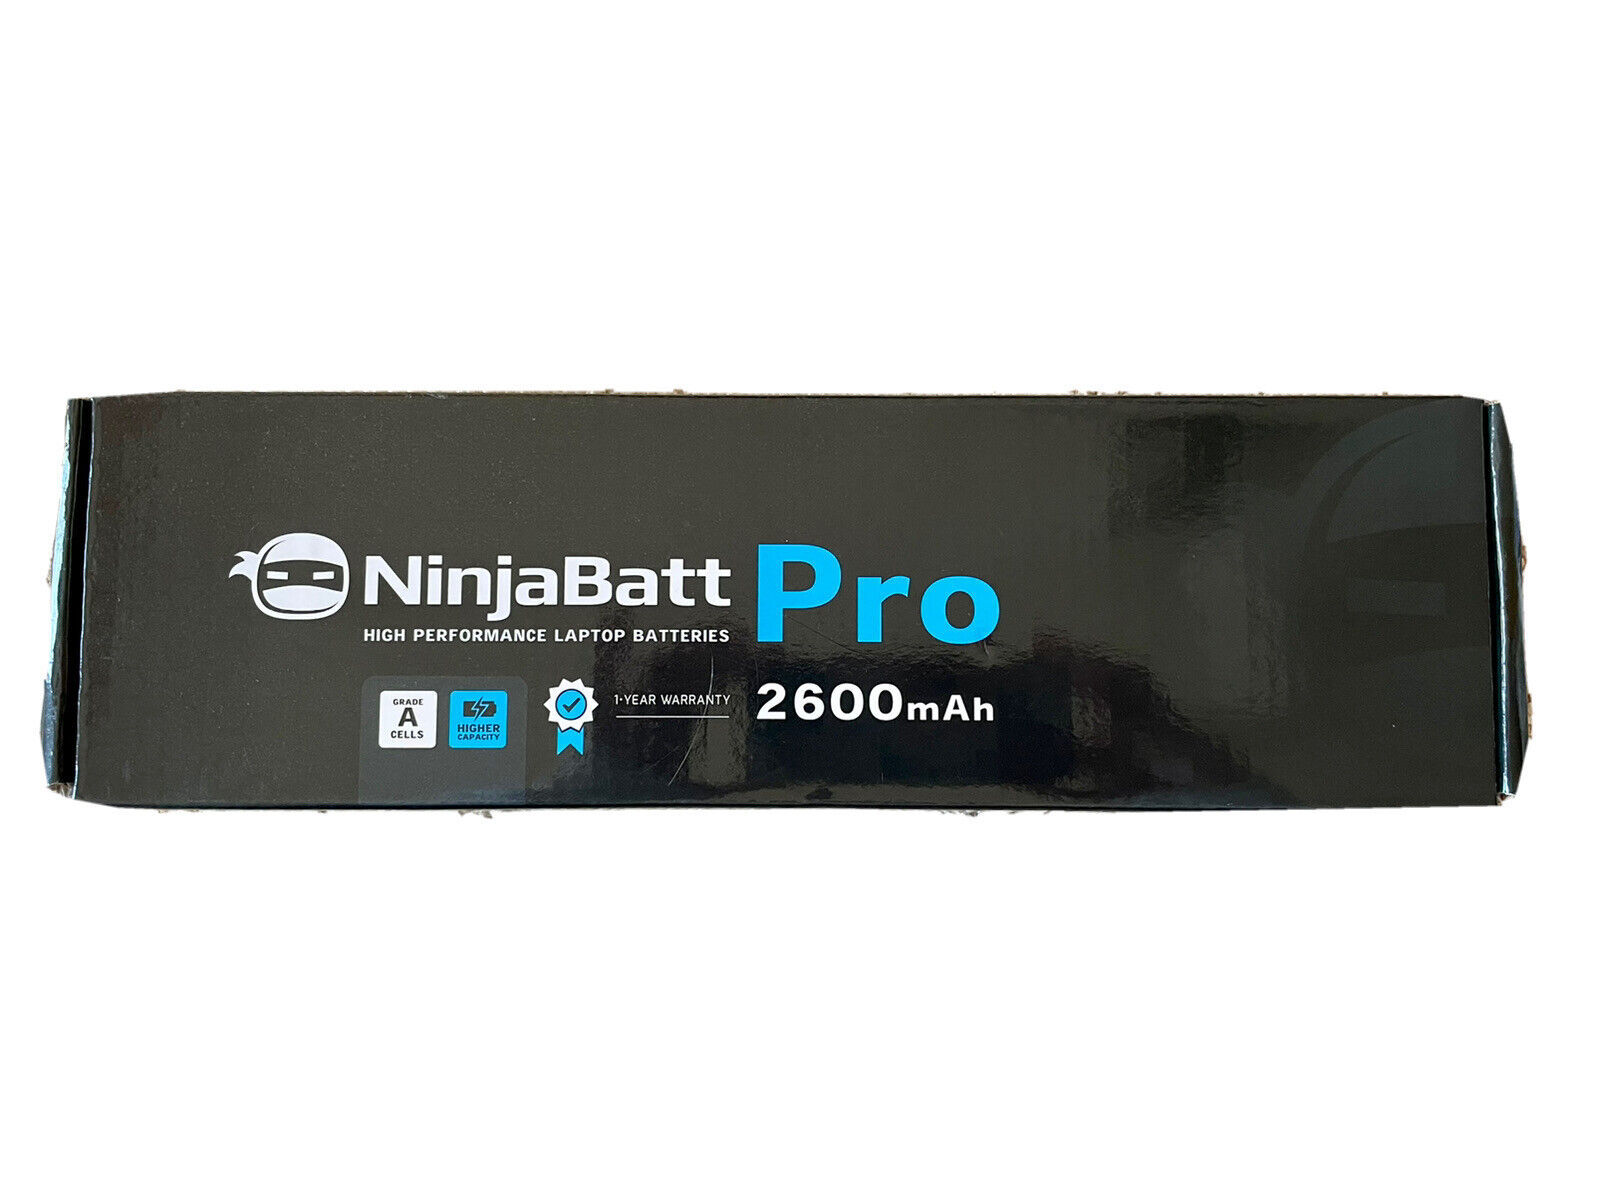 NinjaBatt Pro, HP Pavilion 14/15, HP LA04, Laptop Replacement Battery, QBEK0058,